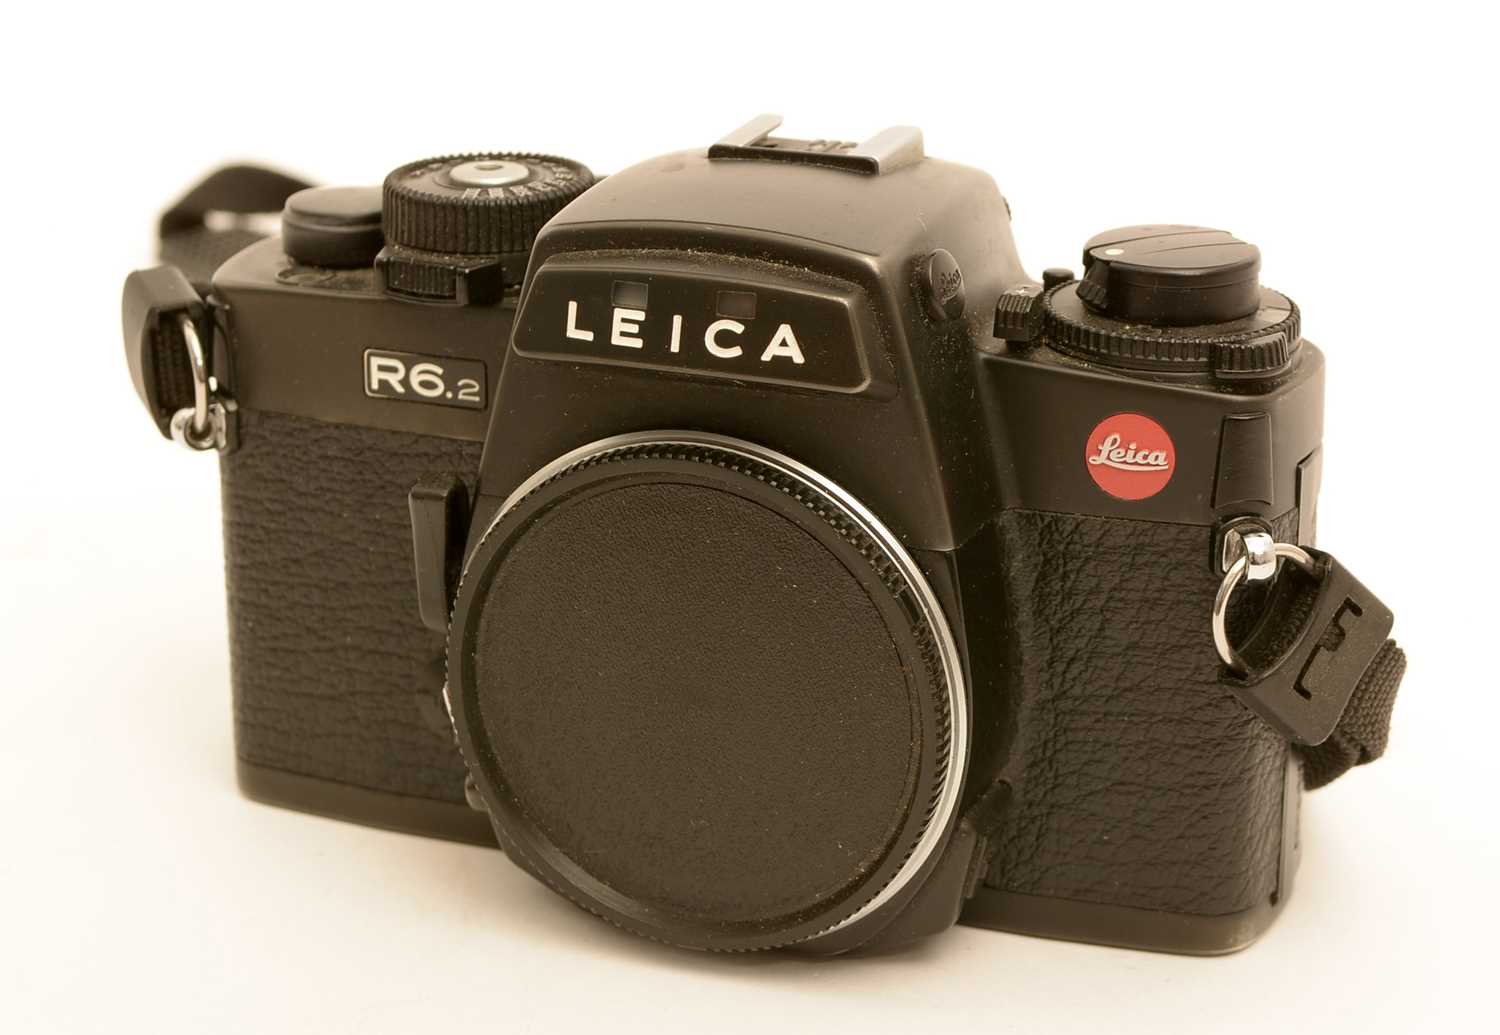 Lot 789 - Leica R6.2 SLR camera.